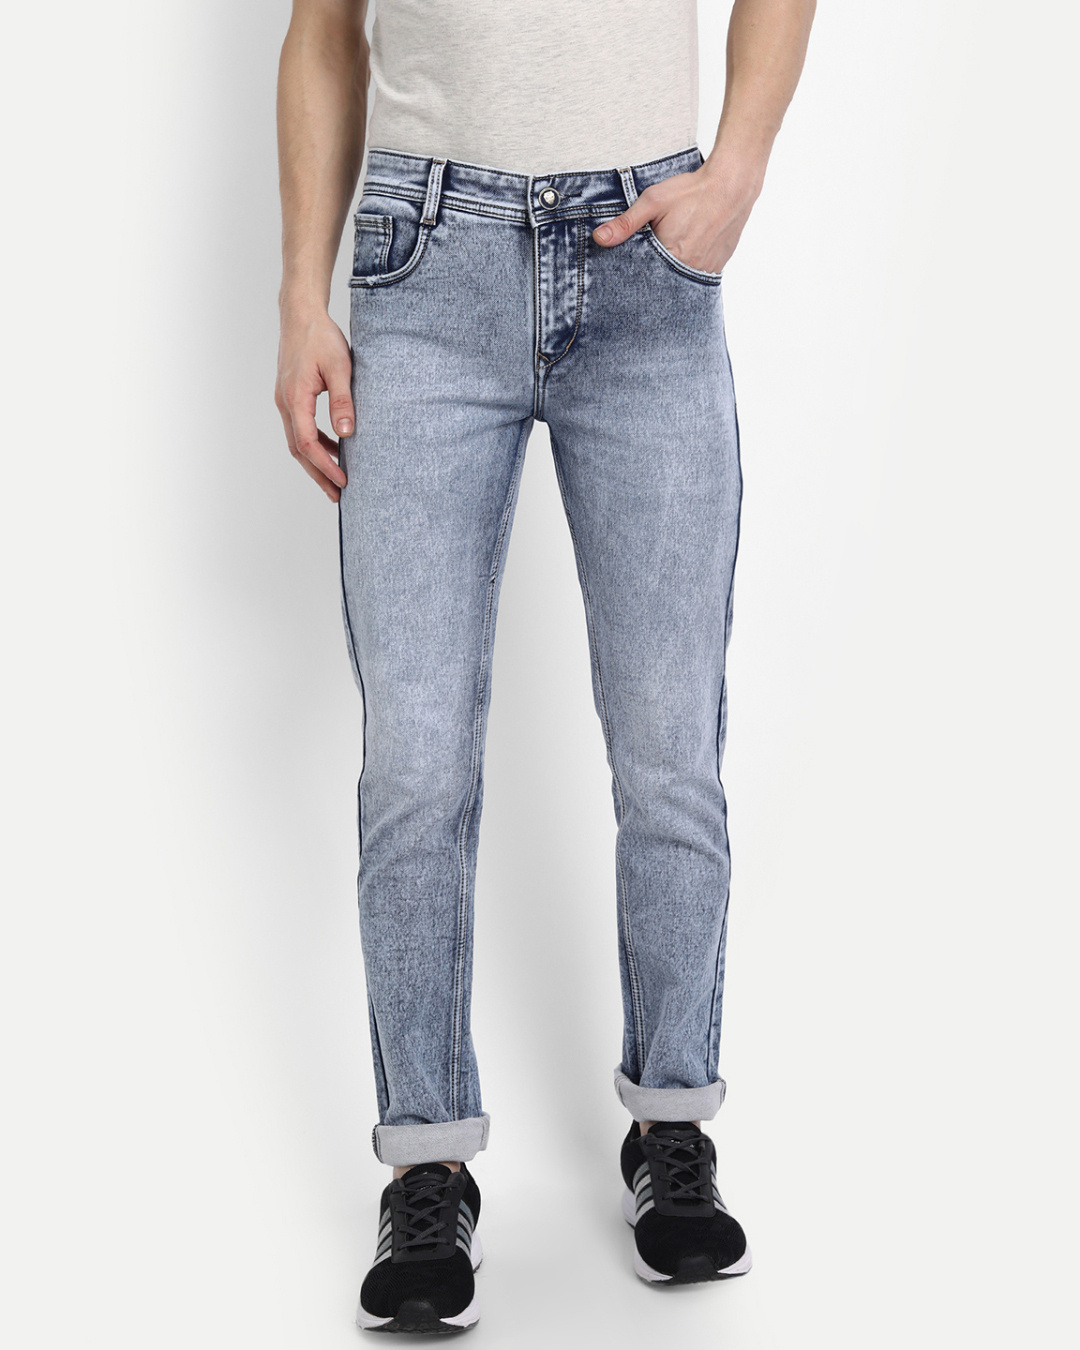 Buy Men's Grey Solid Slim Fit Denim Jeans for Men Grey Online at Bewakoof